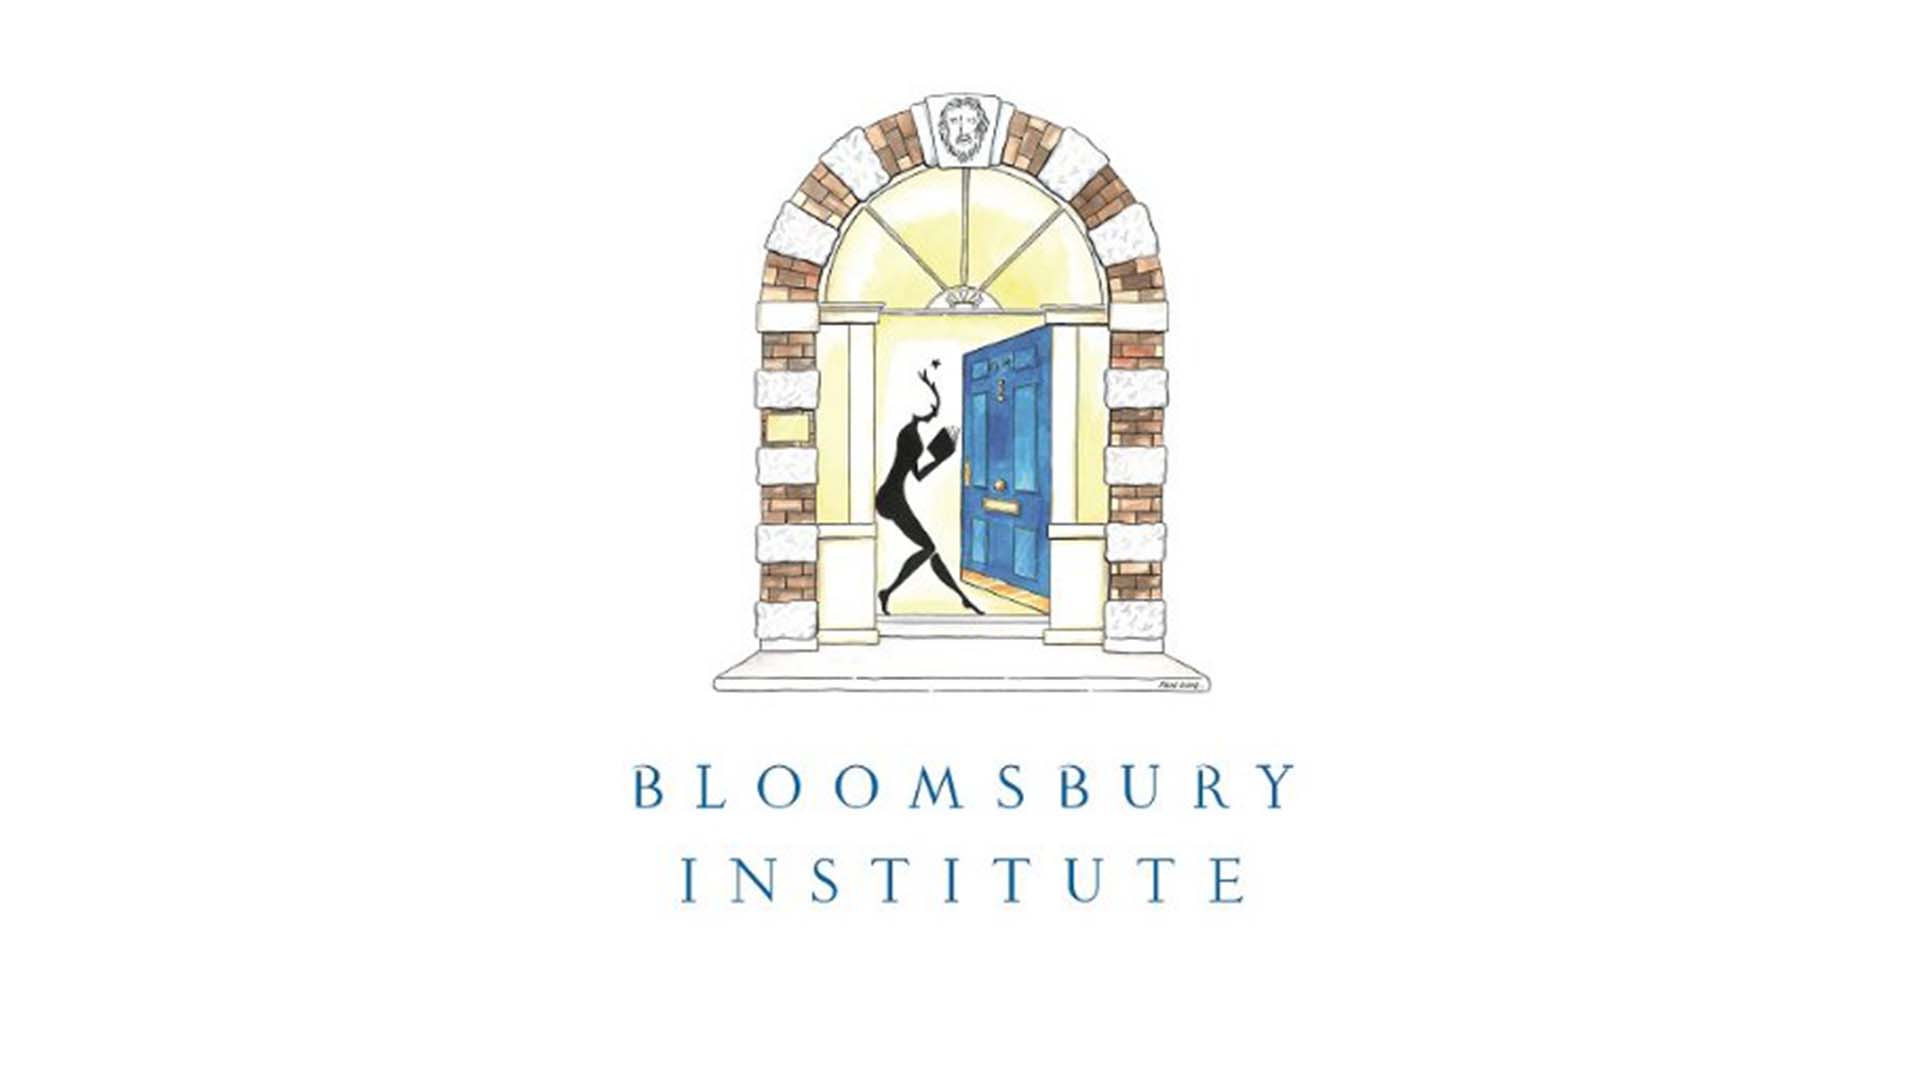 Bloomsbury Institute website